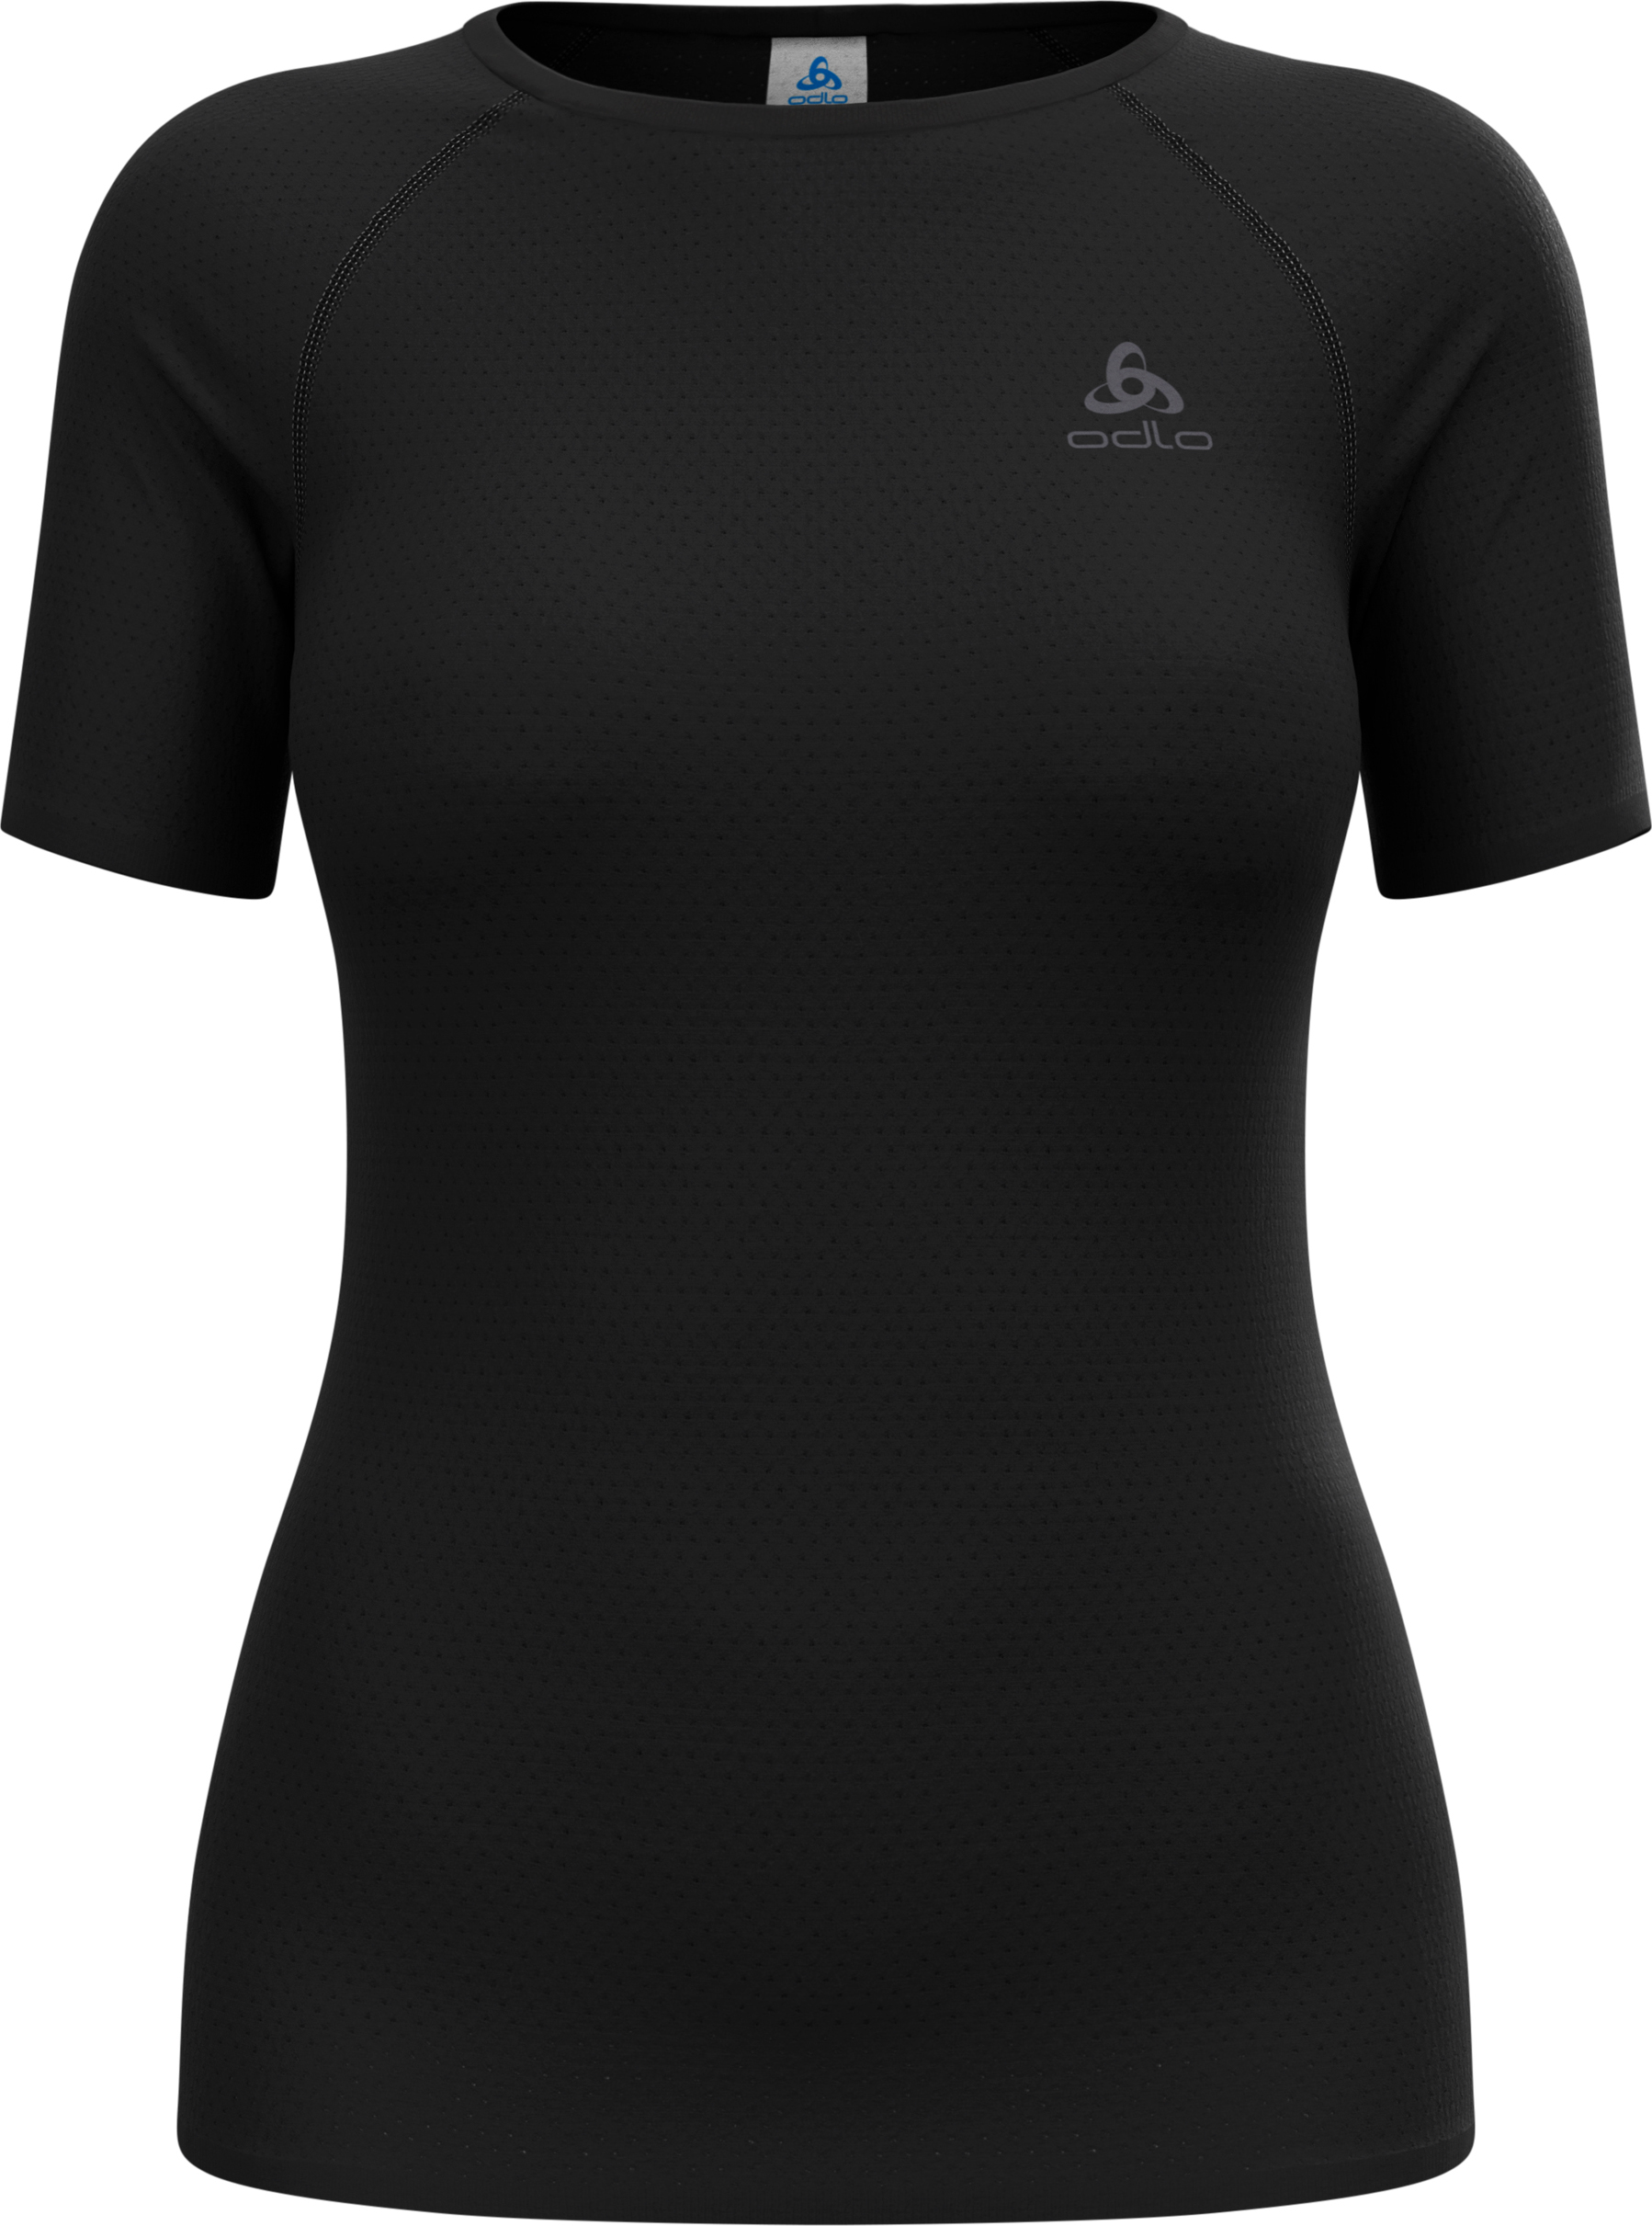 Odlo Women’s The Performance Wool 140 Seamless Base Layer T-Shirt Black